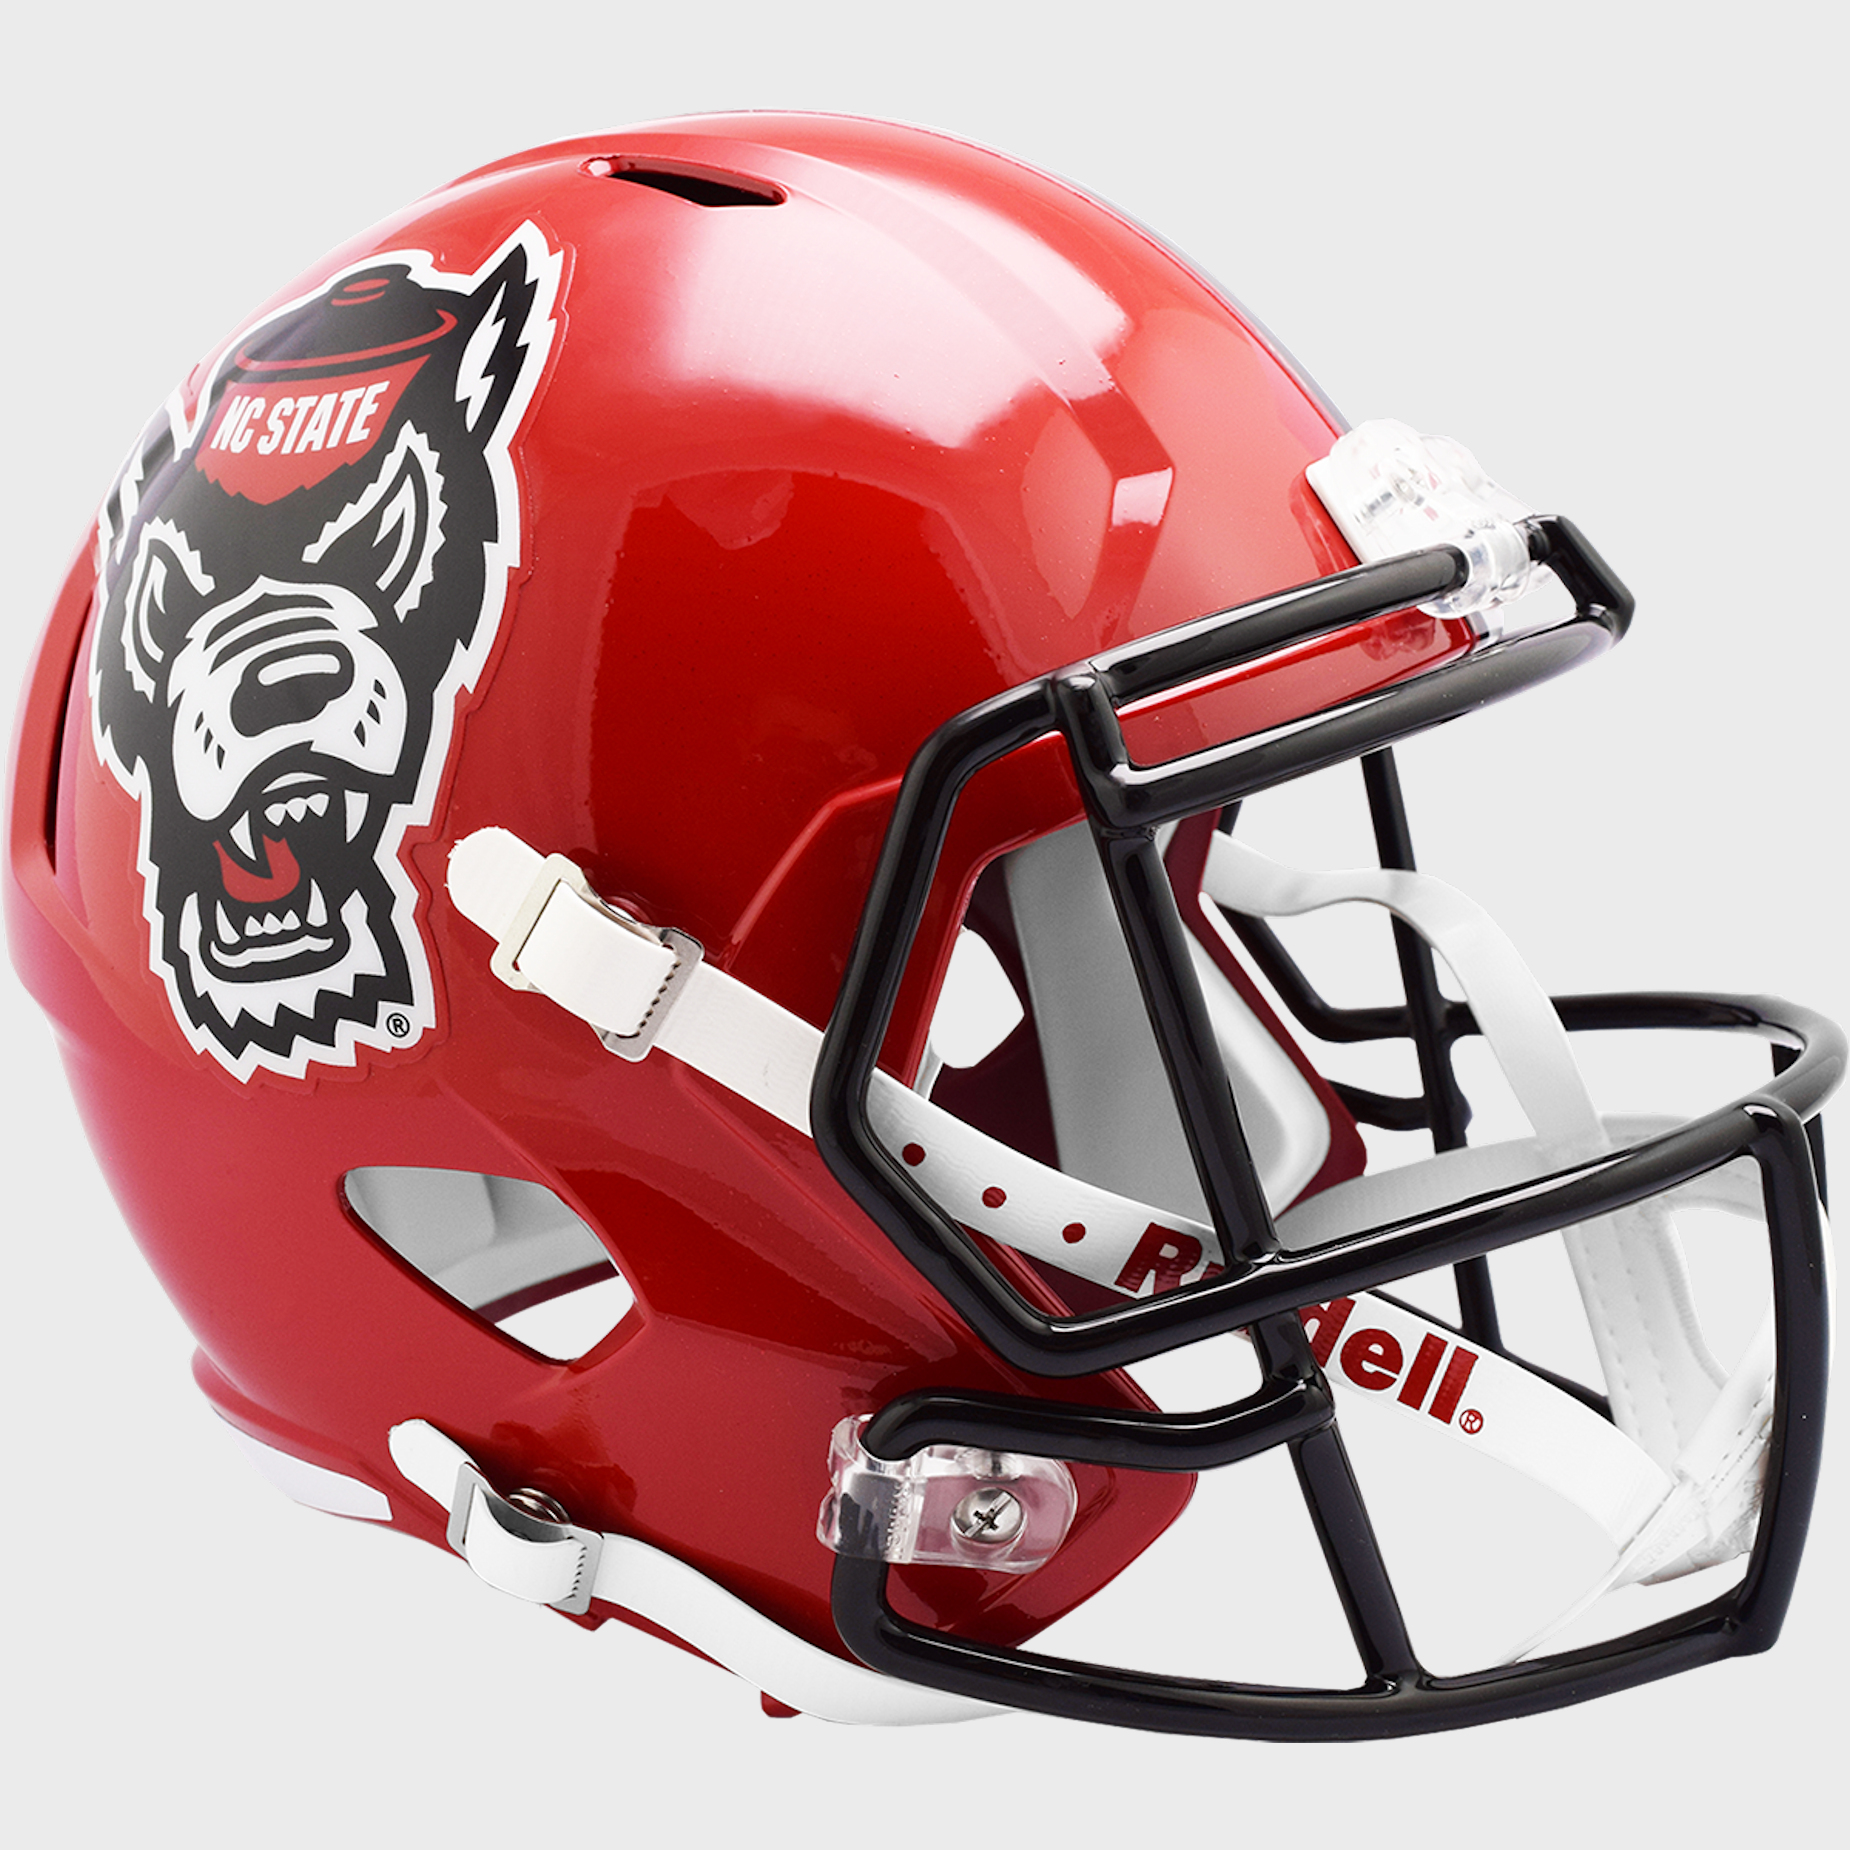 North Carolina State Wolfpack Speed Replica Football Helmet <B>NEW 2018 Red Tuffy</B>